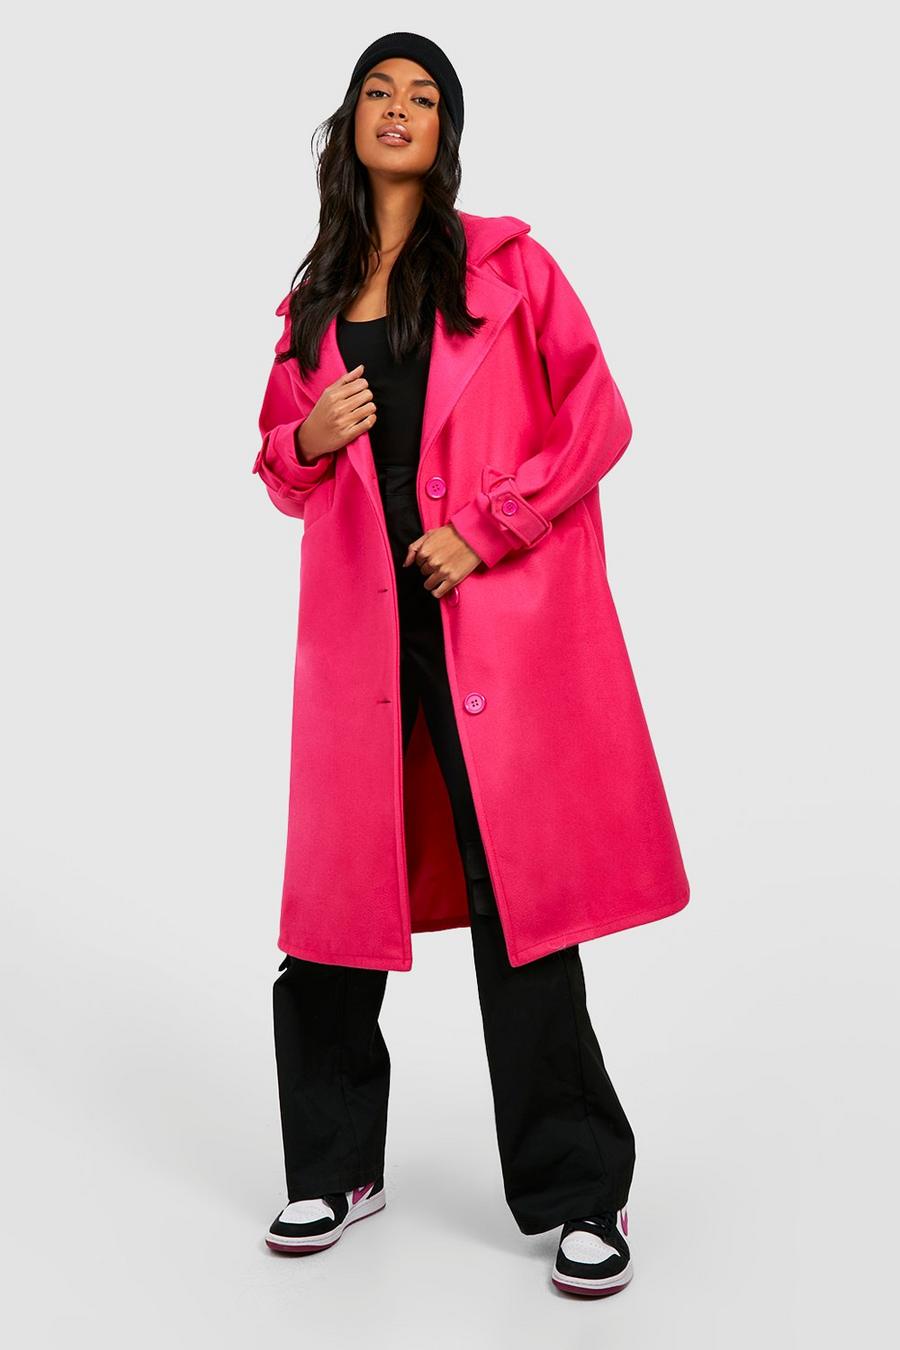 Manteau super oversize en laine, Bright pink rose